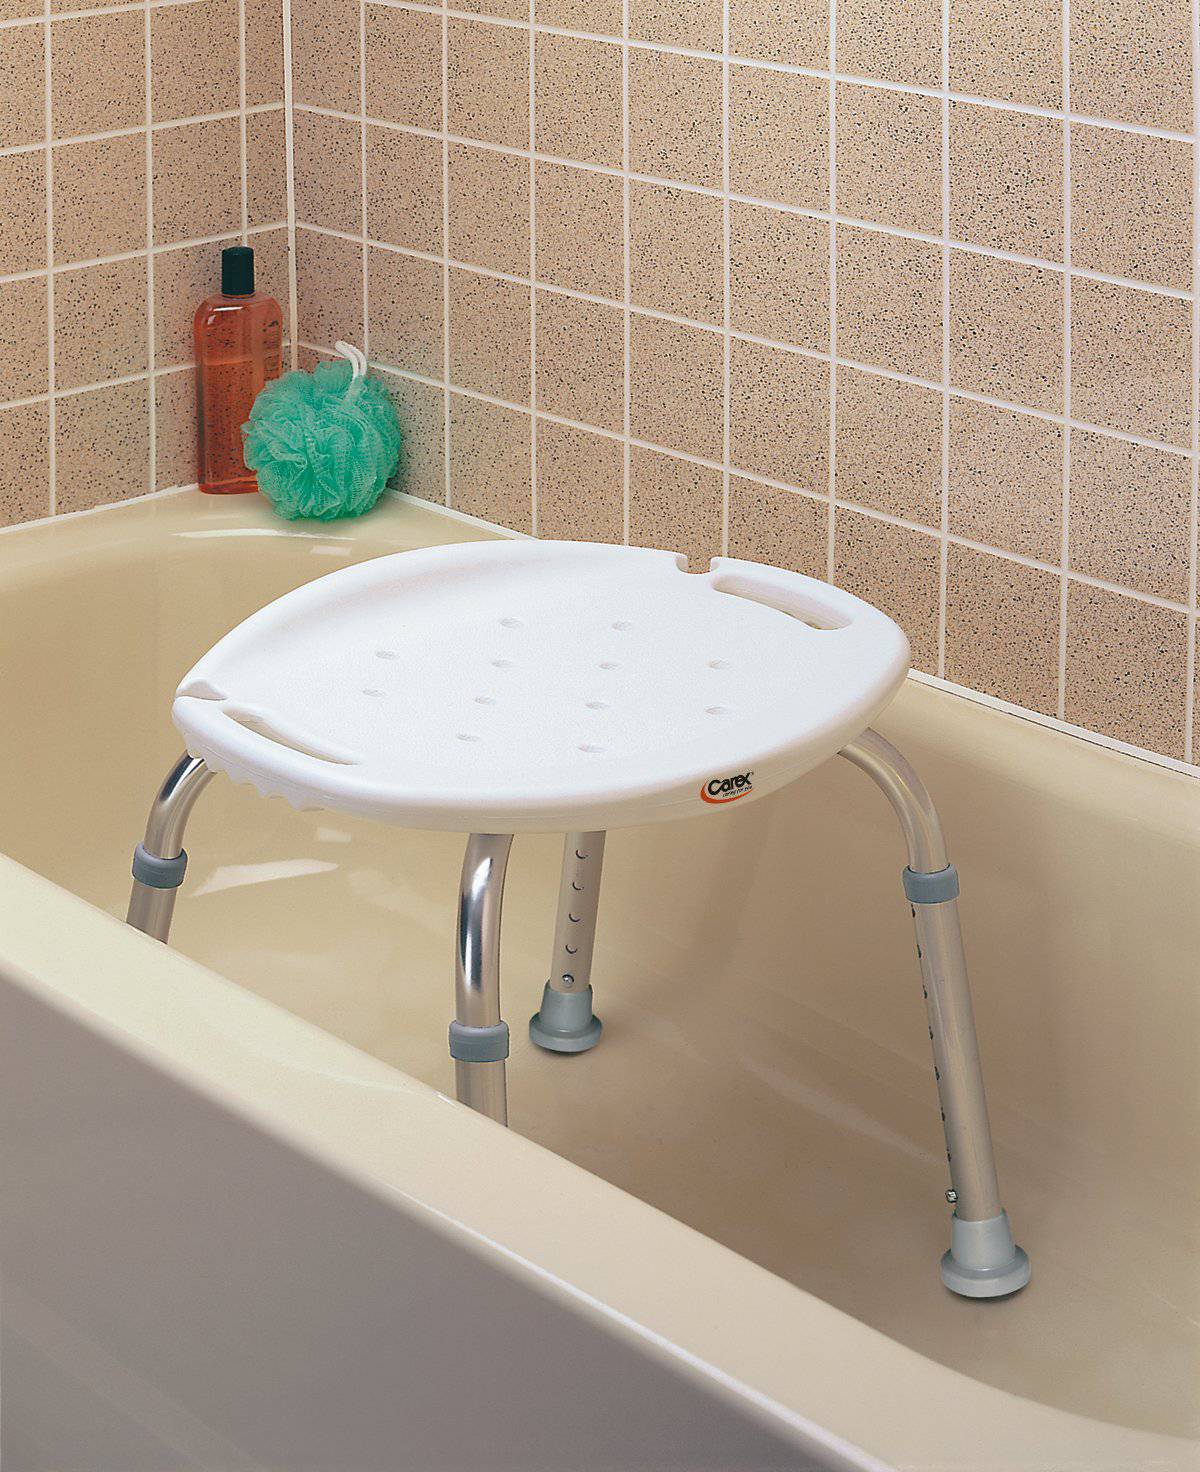 Shower Bench Seat Bathtub Cushion Shower Chair for Elderly Seniors